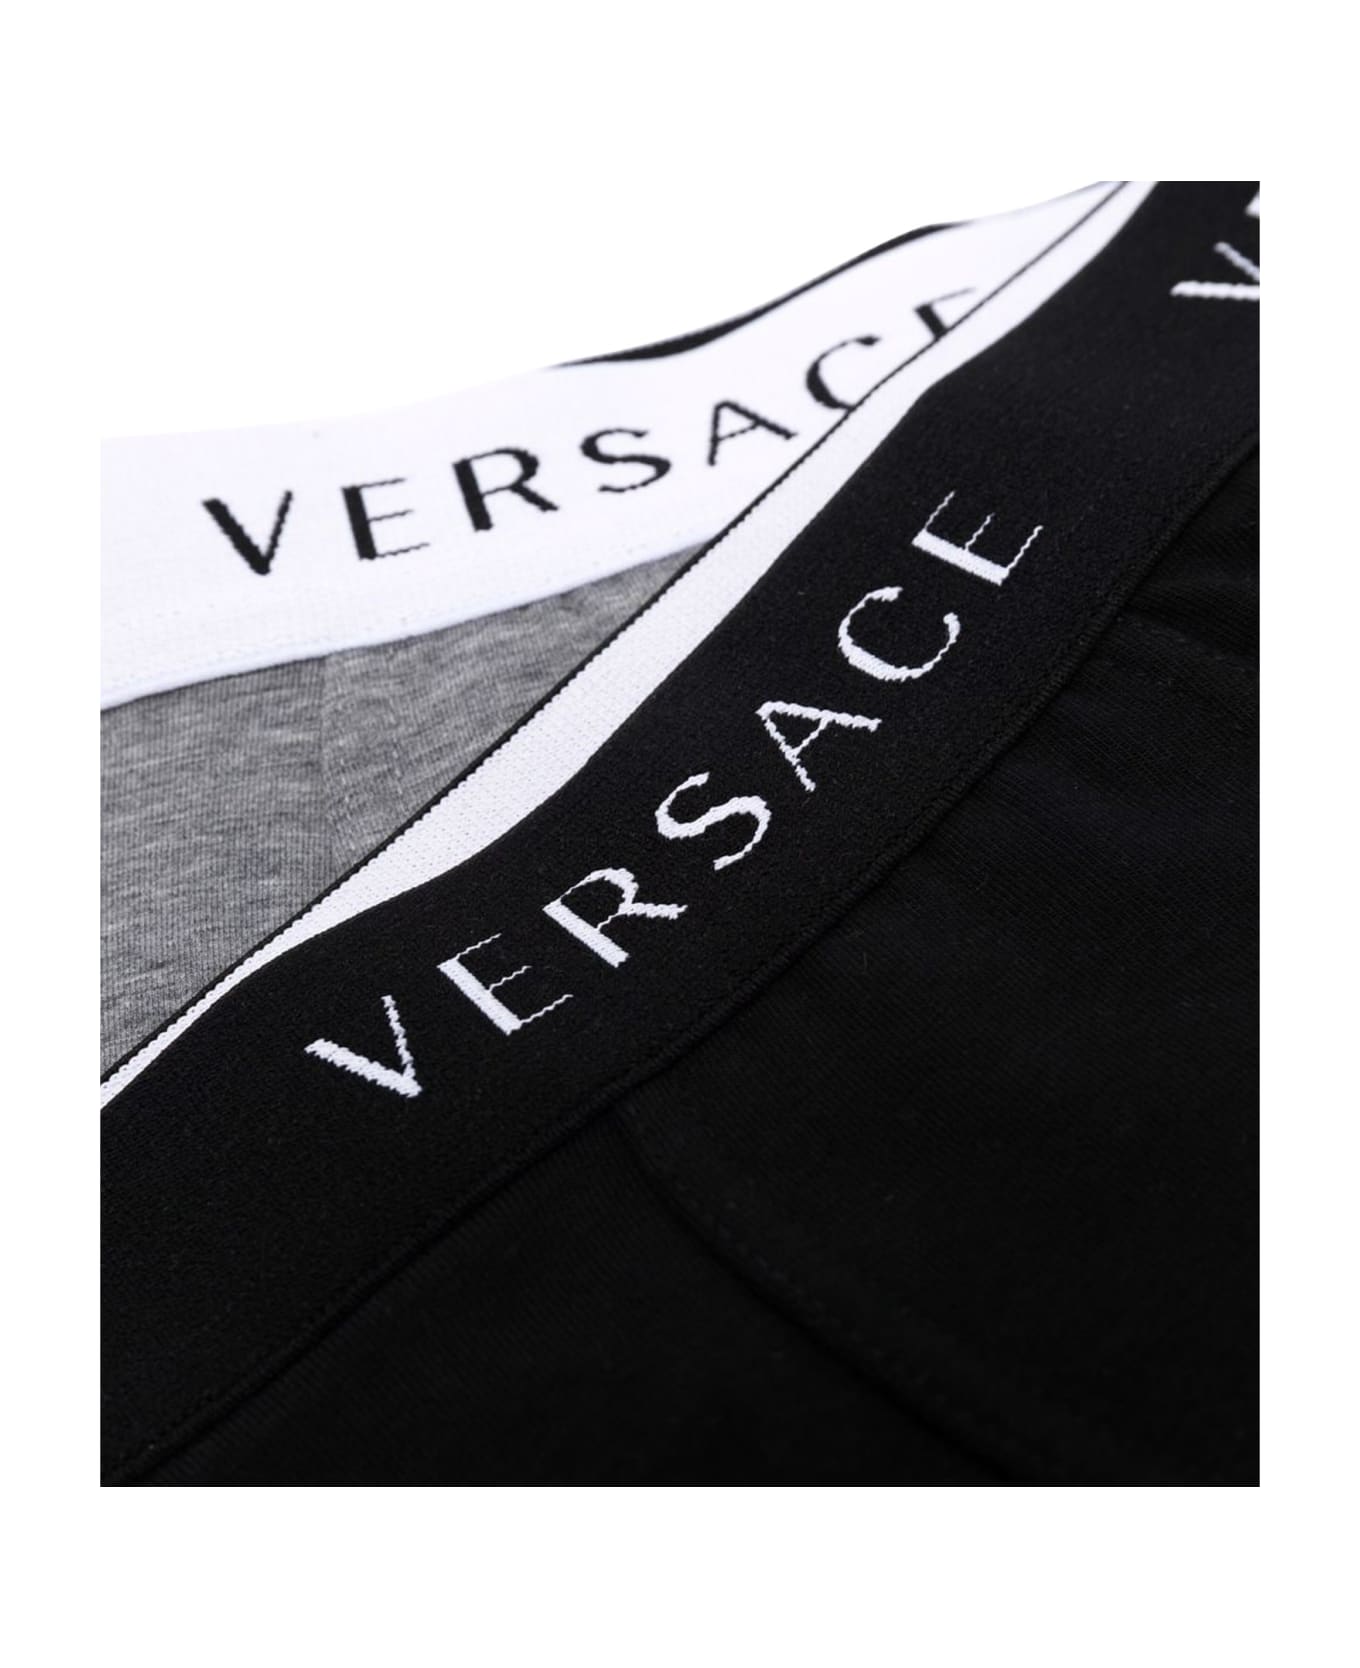 Versace Bi-pack - MULTICOLOR